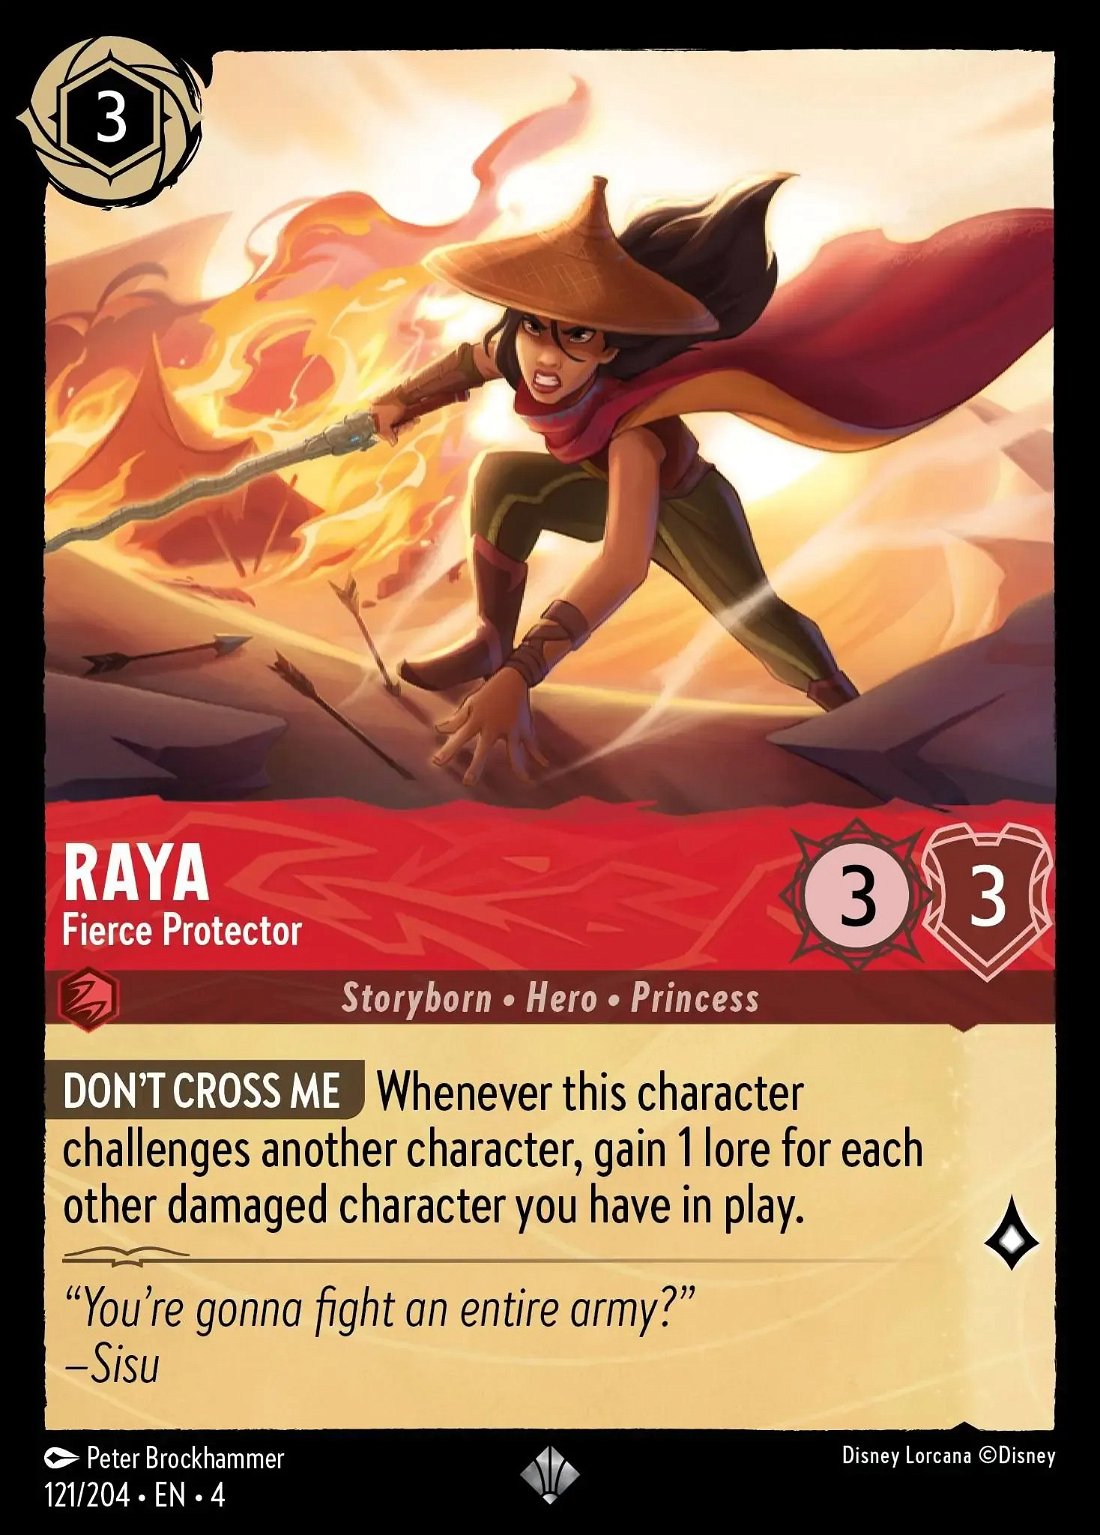 Raya - Fierce Protector Crop image Wallpaper